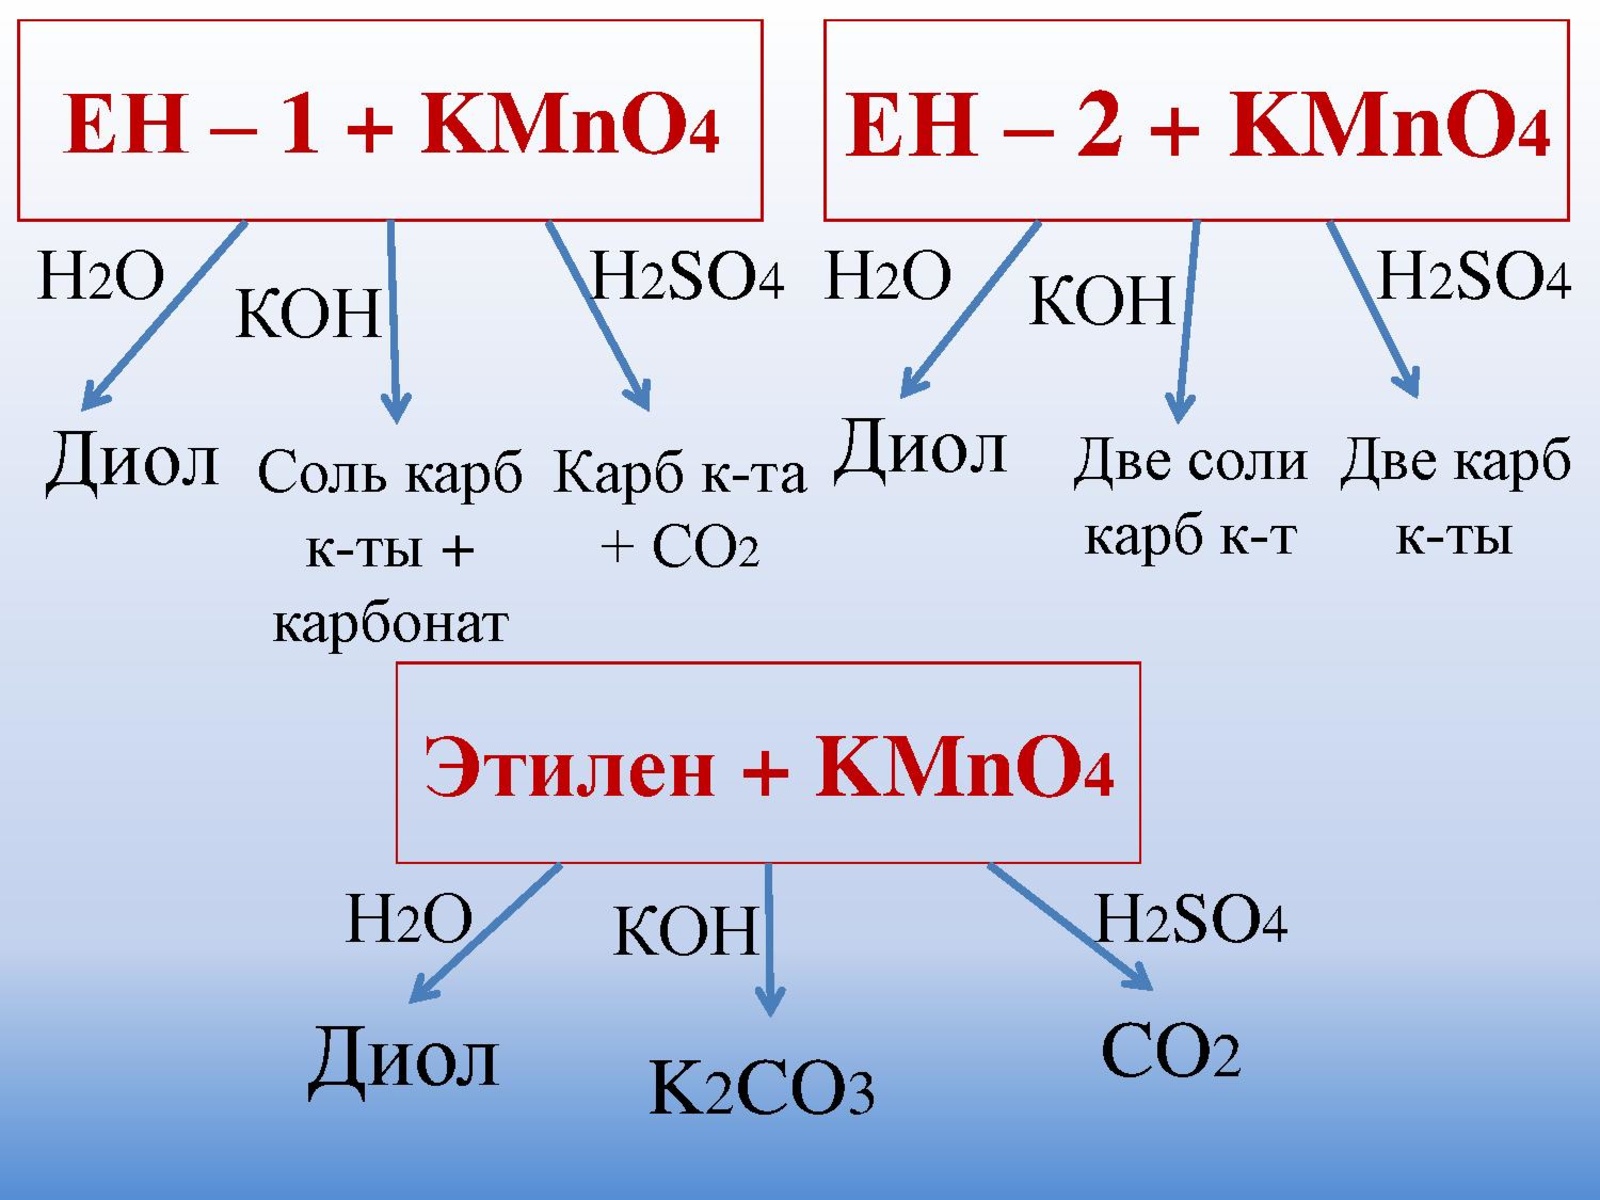 H2so4 кислые соли. Этилен kmno4 h2o. Этен kmno4. Этилен kmno4 h+. Этилен kmno4 h2so4.